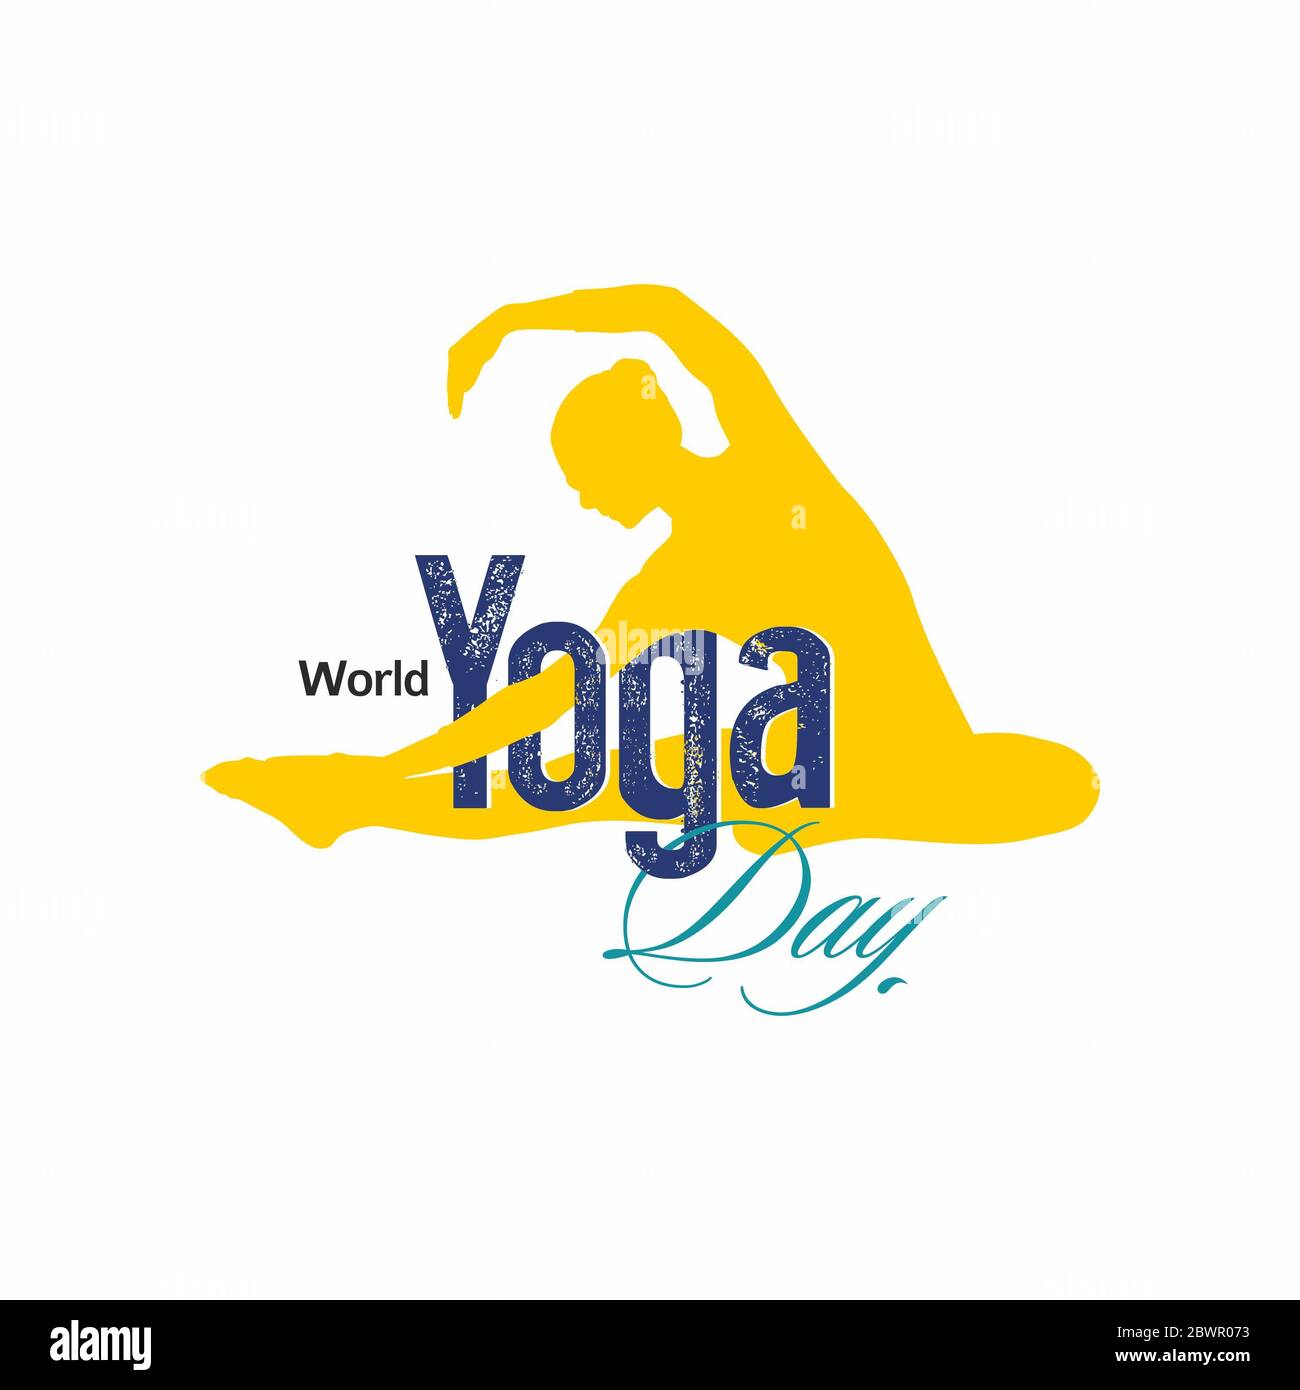 https://c8.alamy.com/comp/2BWR073/international-yoga-day-banner-yoga-day-calligraphy-world-yoga-day-illustration-2BWR073.jpg